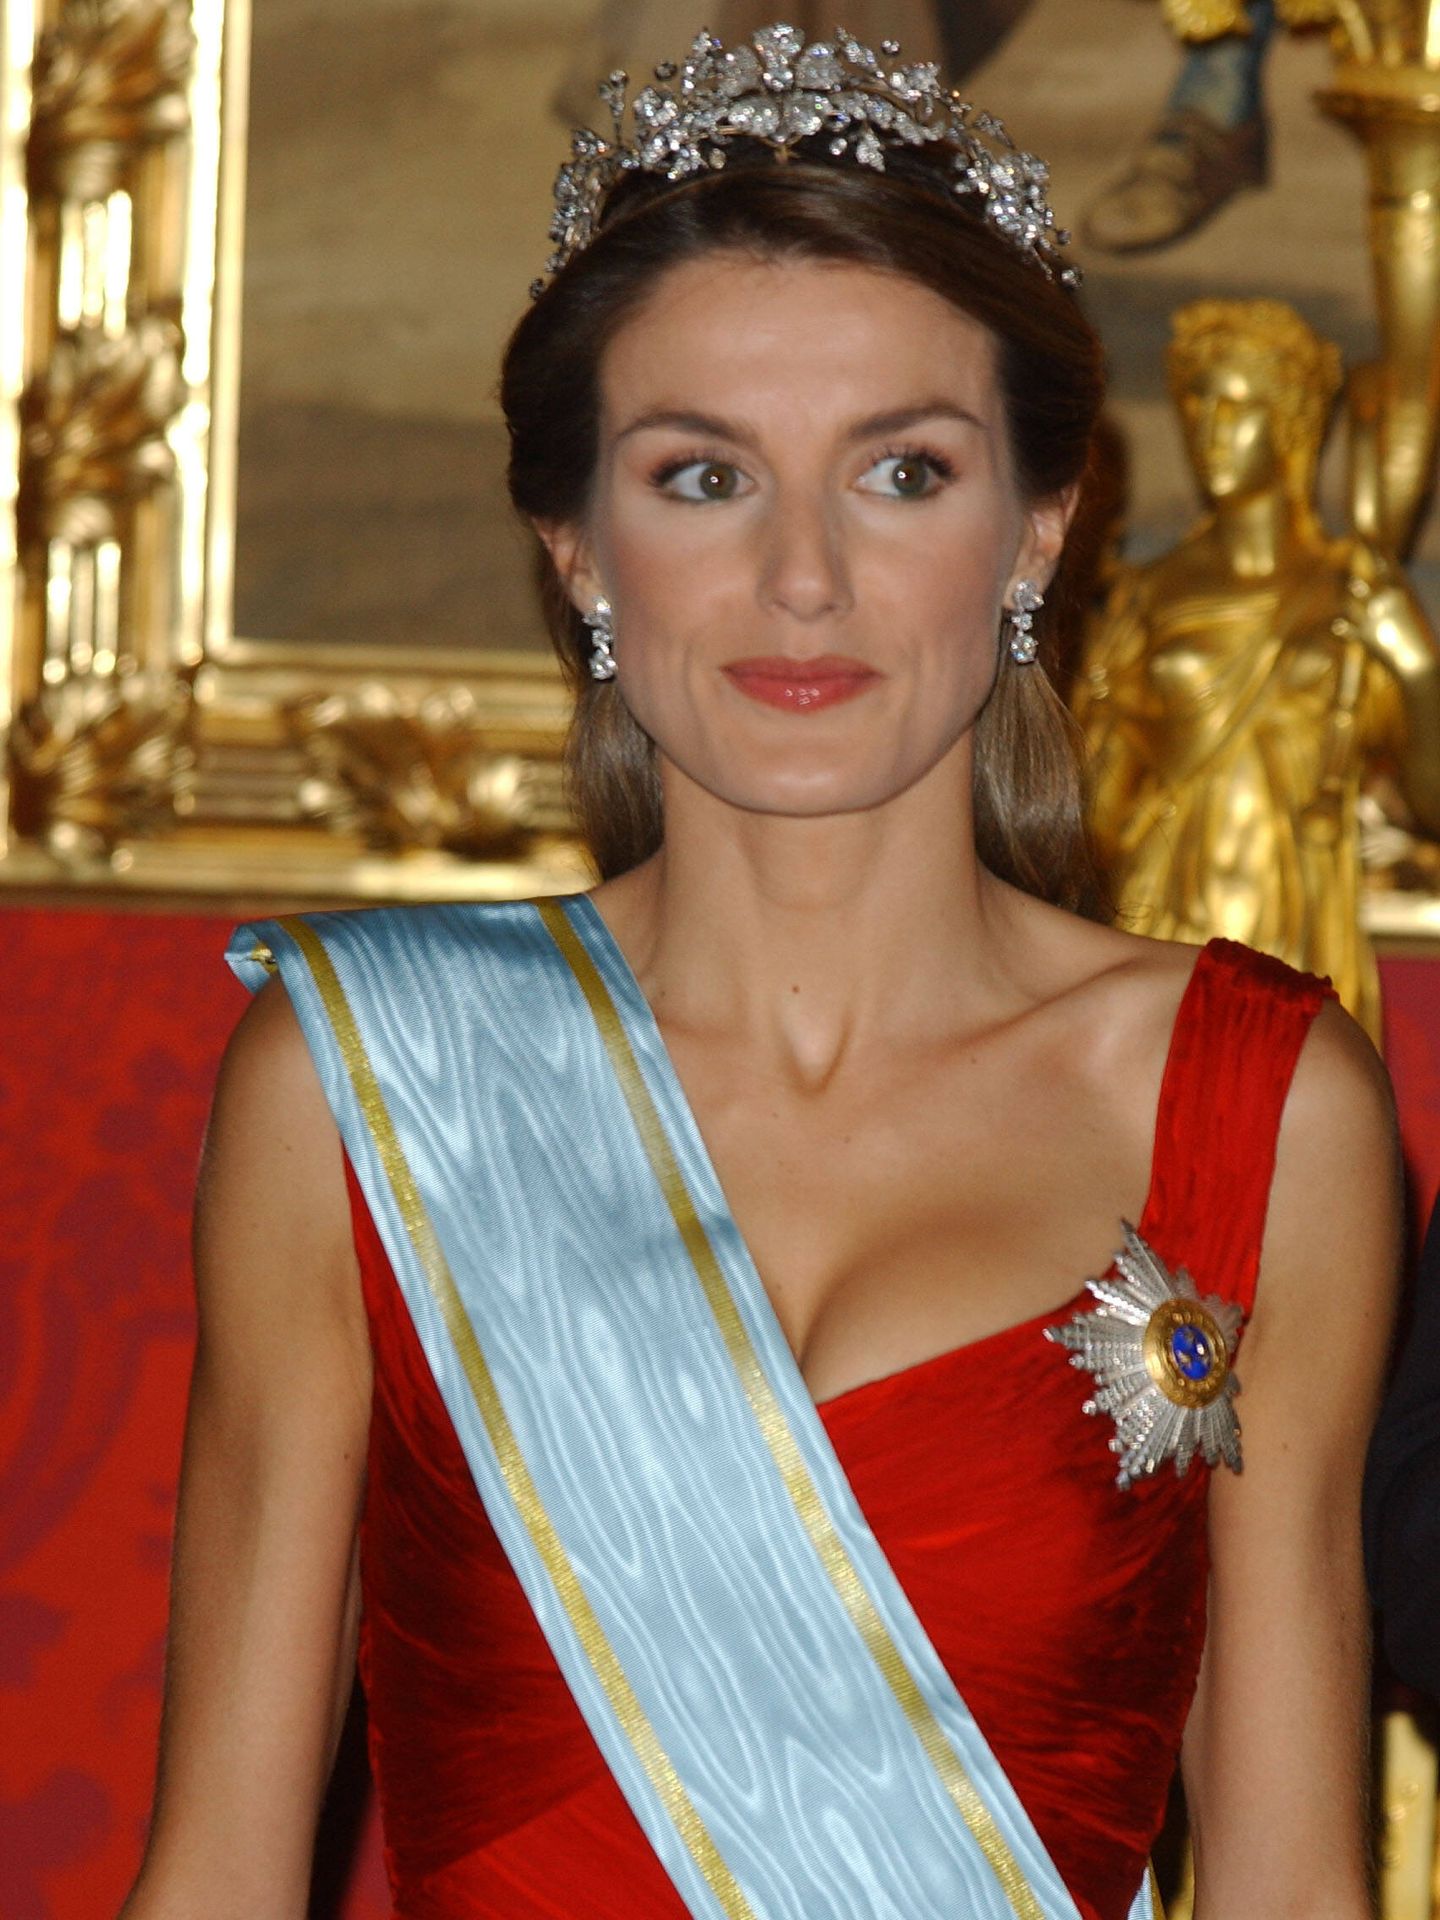  La reina Letizia, en 2004. (Getty)